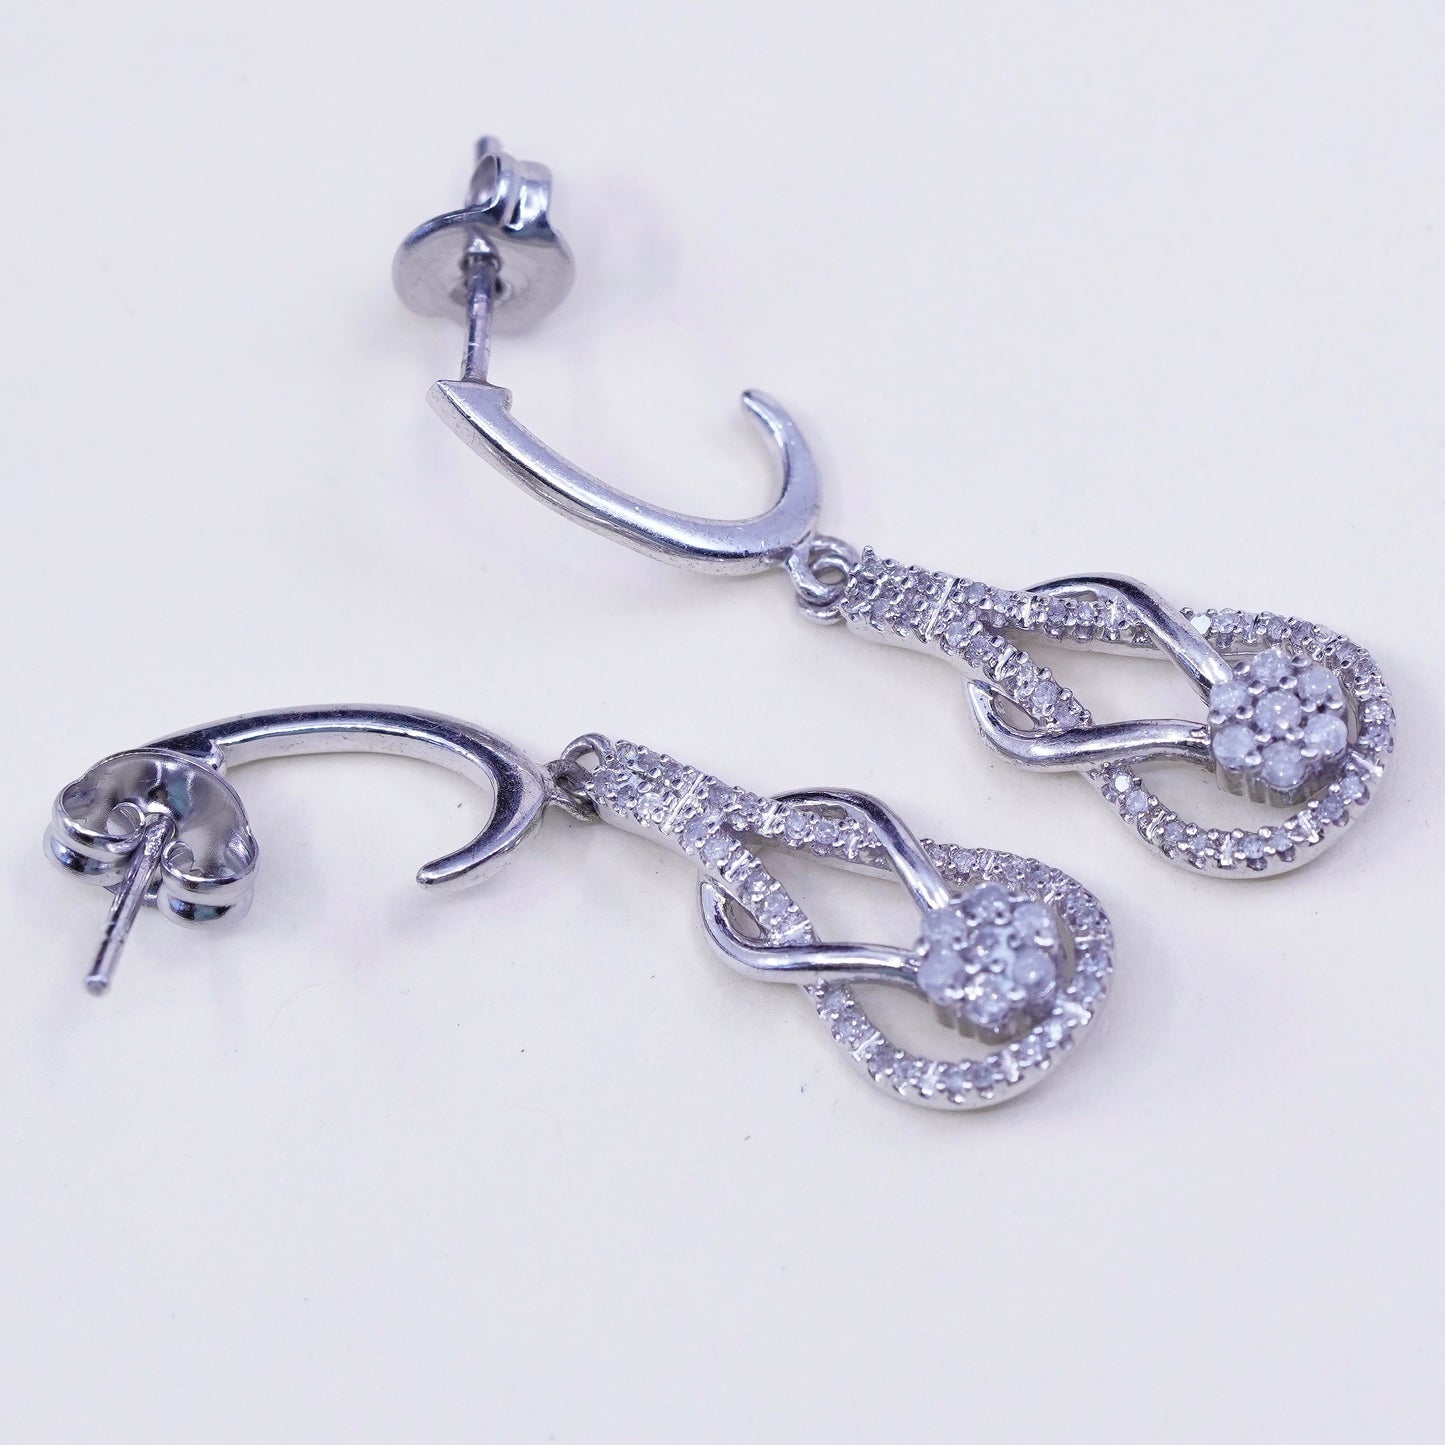 Vintage sterling 925 silver entwined teardrop earrings with genuine diamond